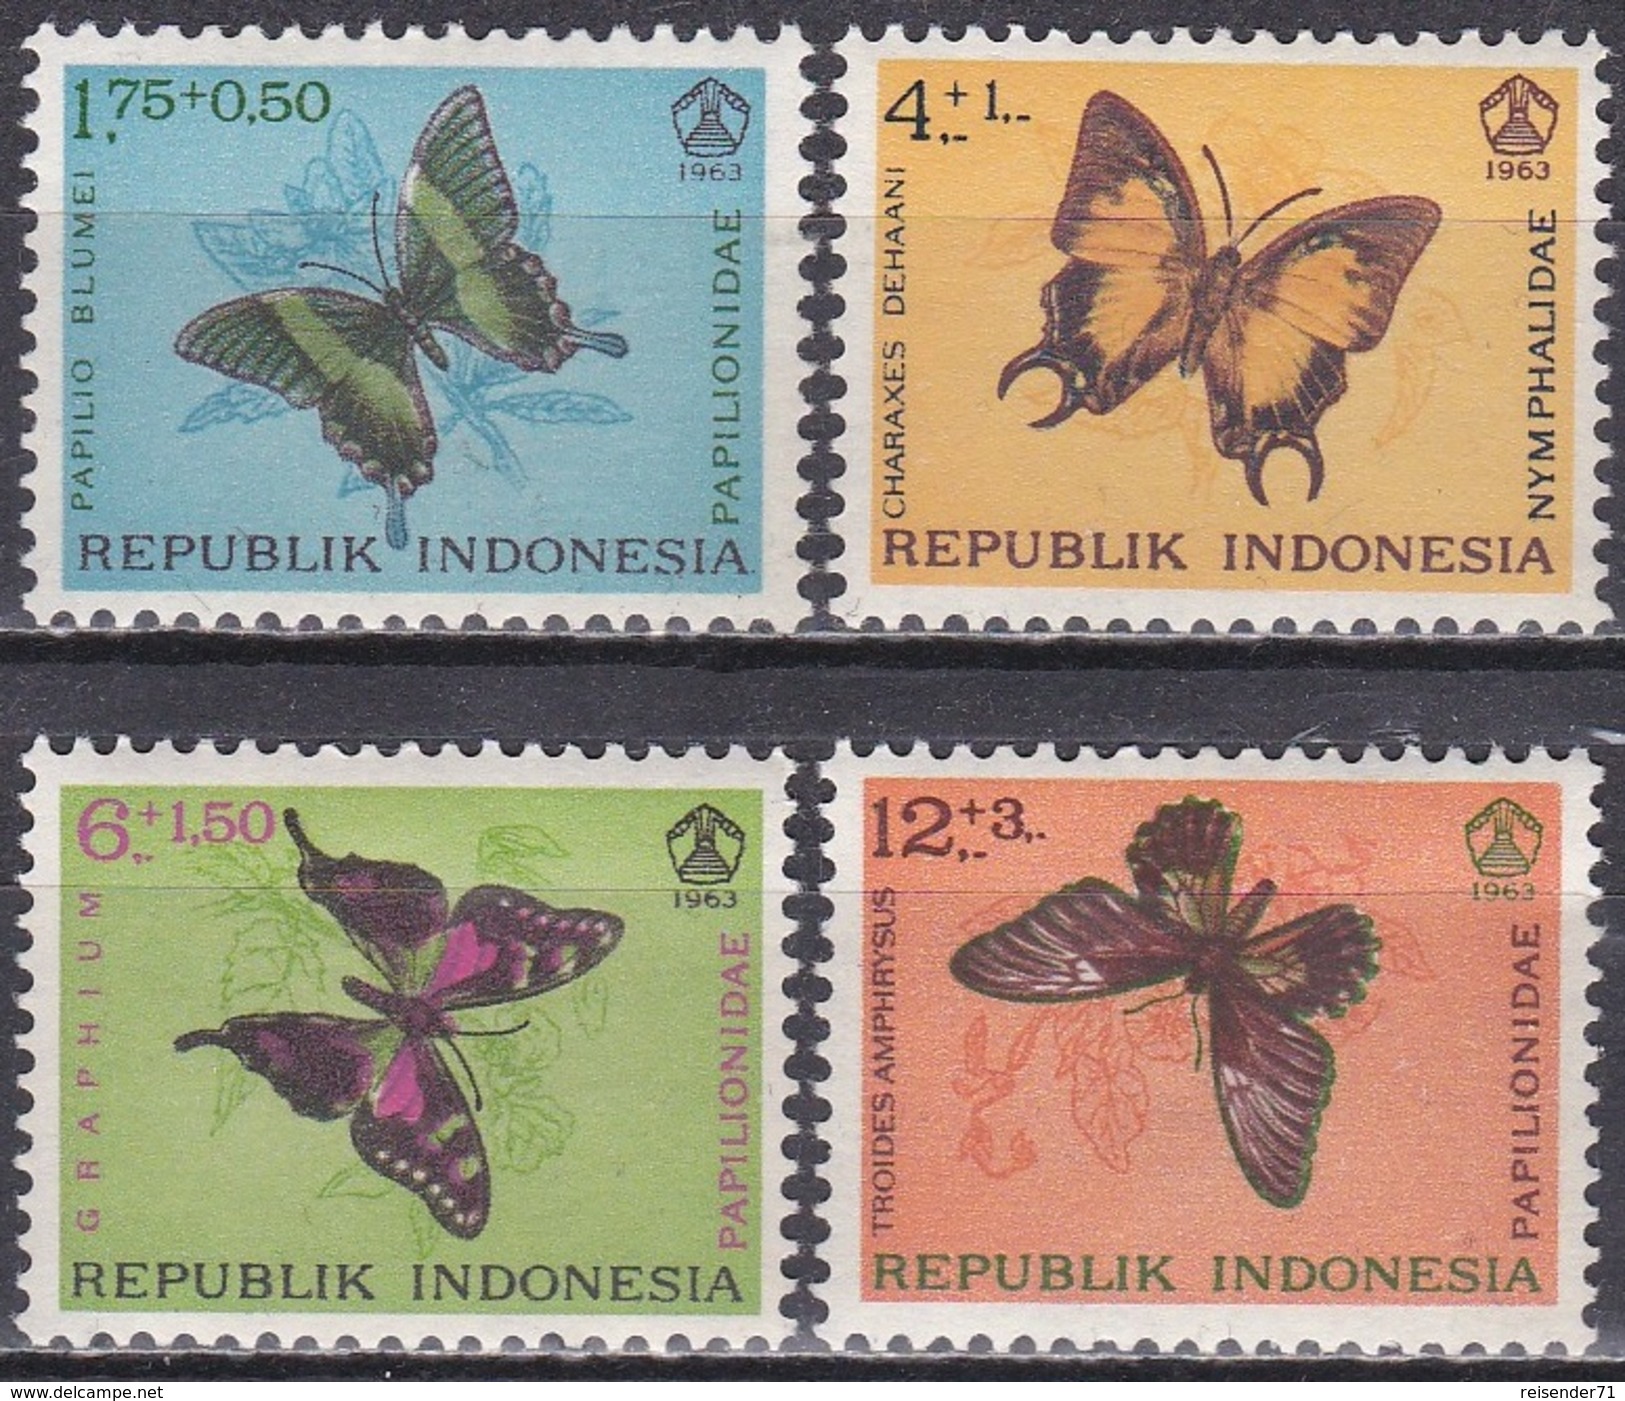 Indonesien Indonesia 1963 Tiere Fauna Animals Schmetterlinge Butterflies Insekten Insects, Mi. 421-4 ** - Indonesia